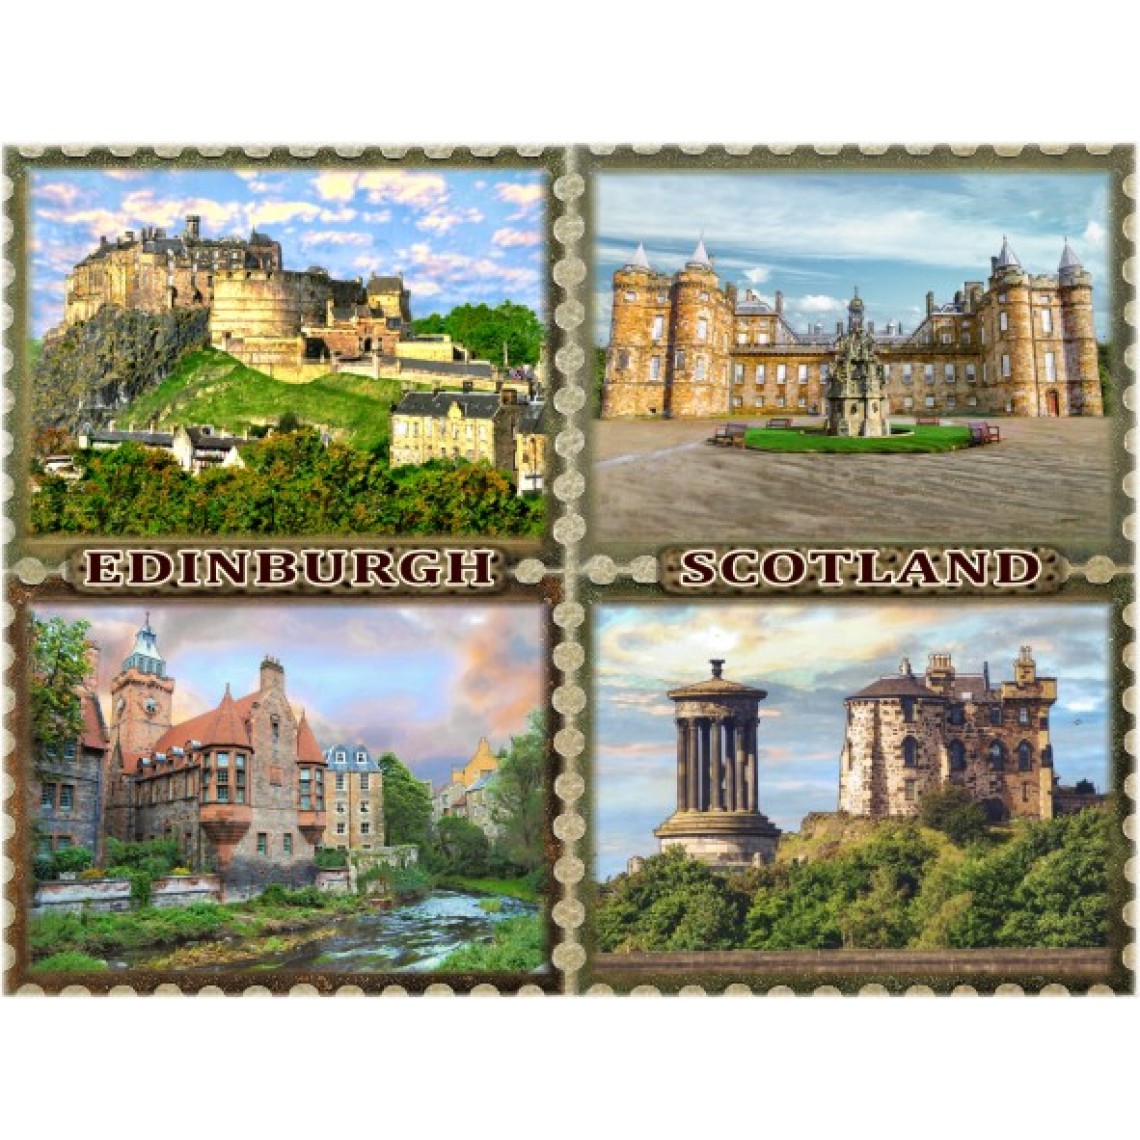 Edinburgh Souvenirs, Magnets, Gifts